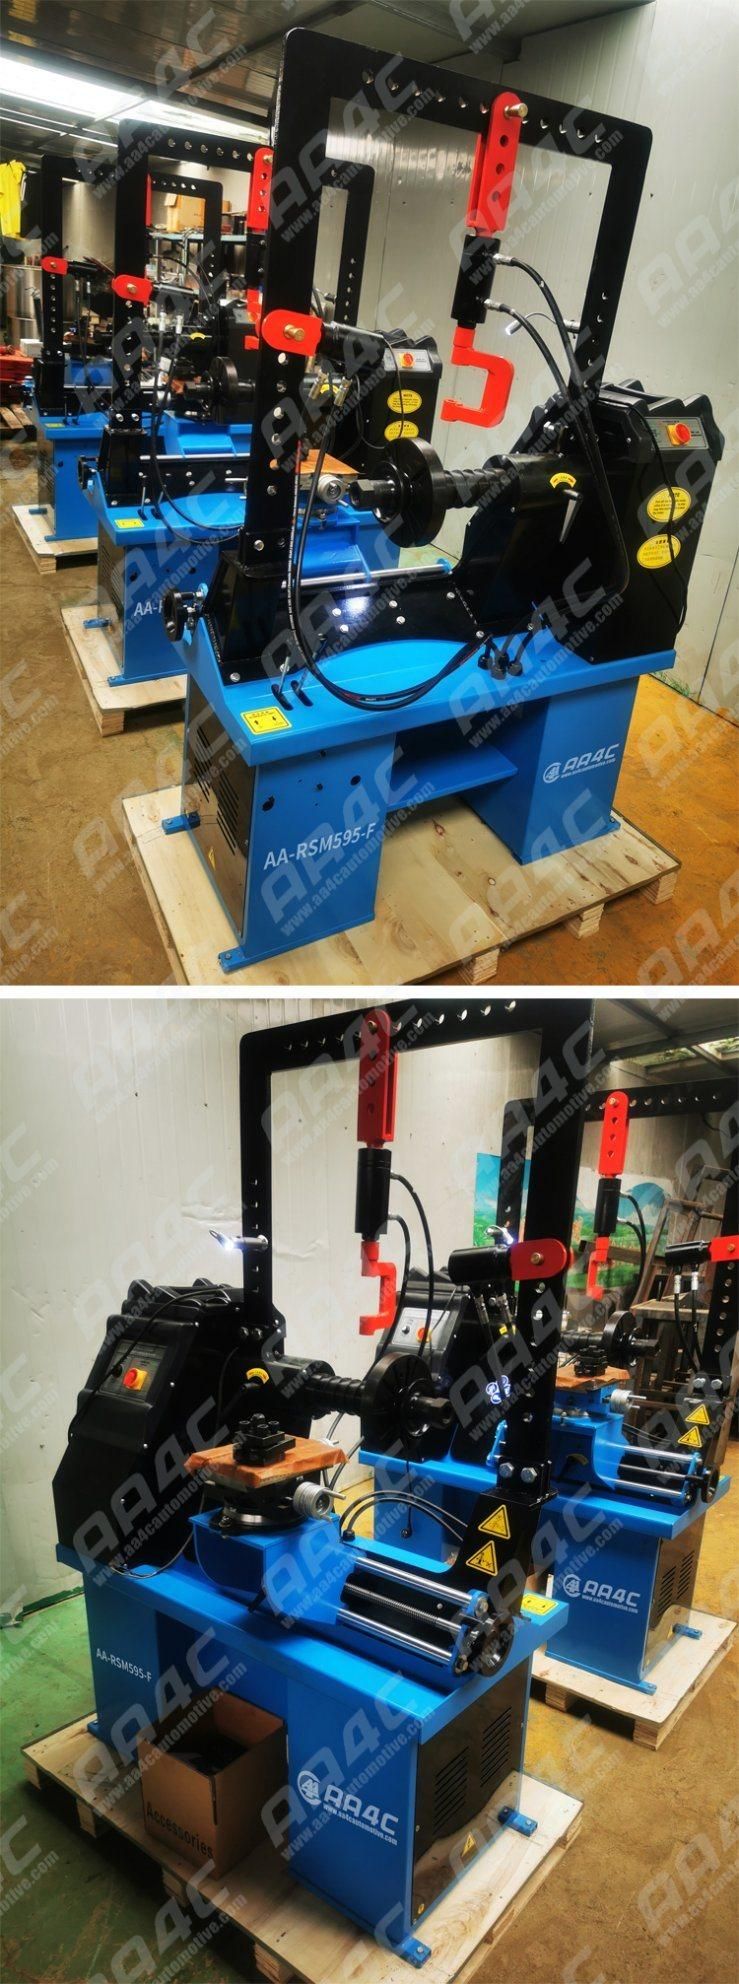 AA4c Full Automatic Rim Straightening Machine Alloy Wheel Processing Machine with Full Teeth Dual Cylinder Jack